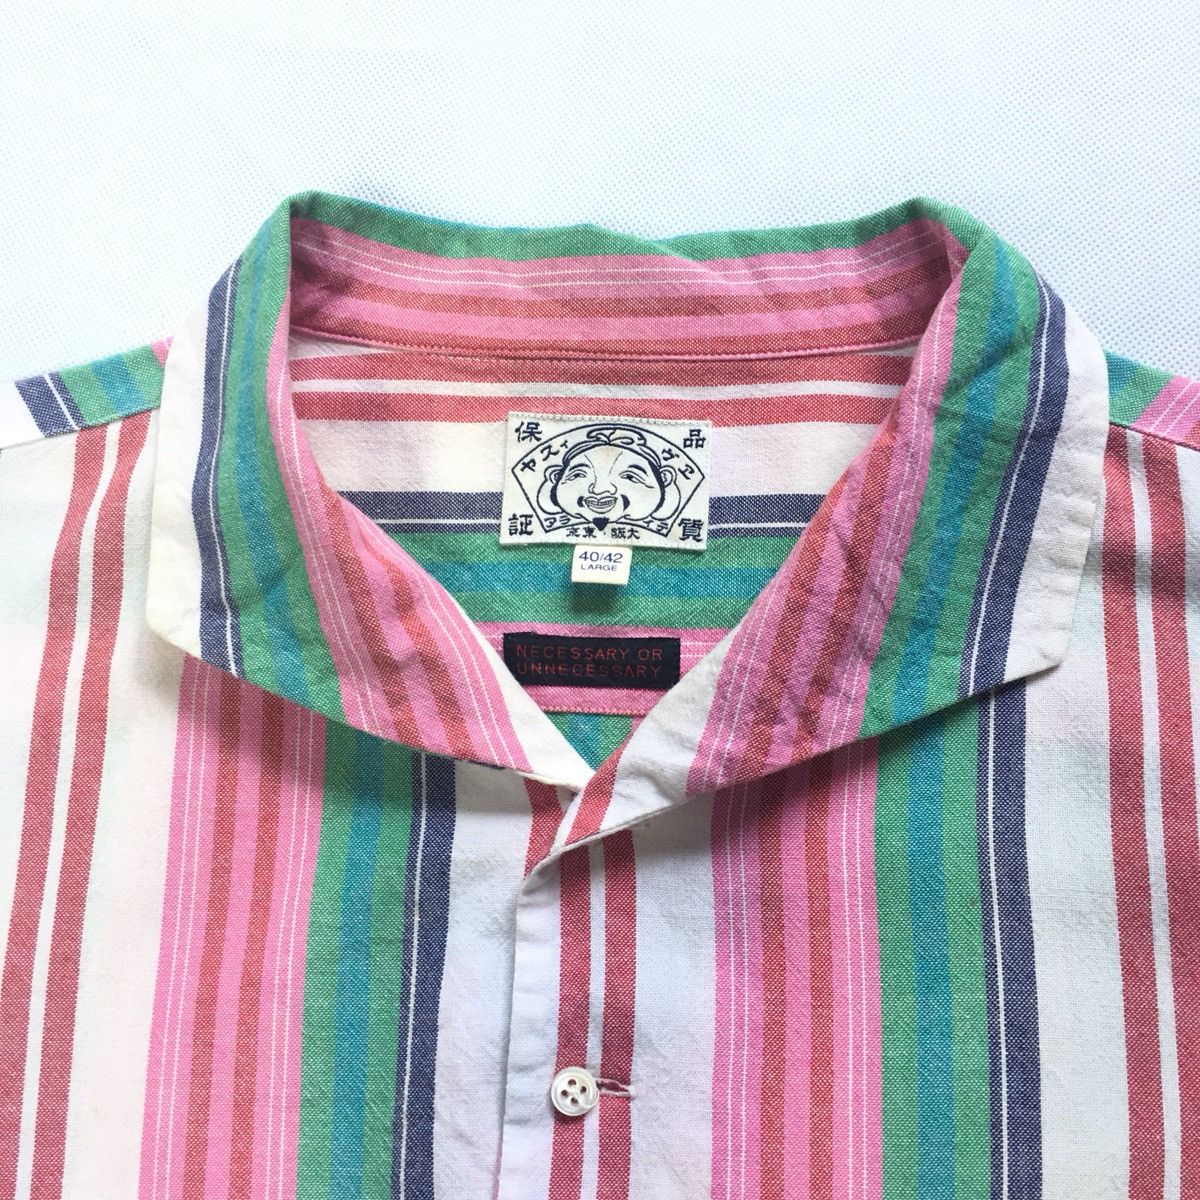 Evisu Japan Multicolor Stripes Pullover Shirt - 7